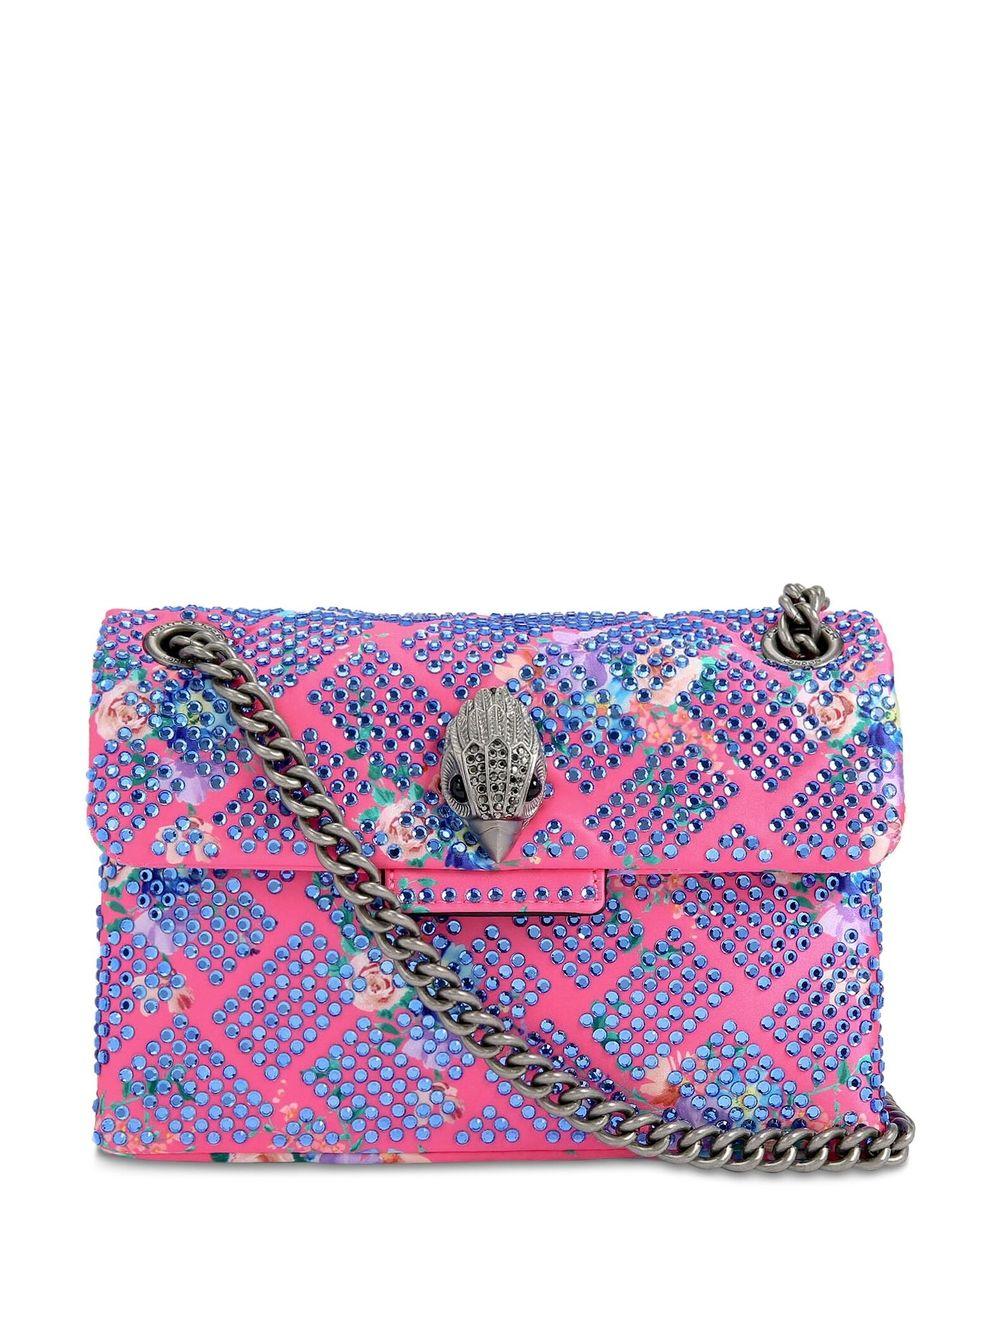 Kurt Geiger Crystal-embellished Mini Kensington Bag in Purple | Lyst